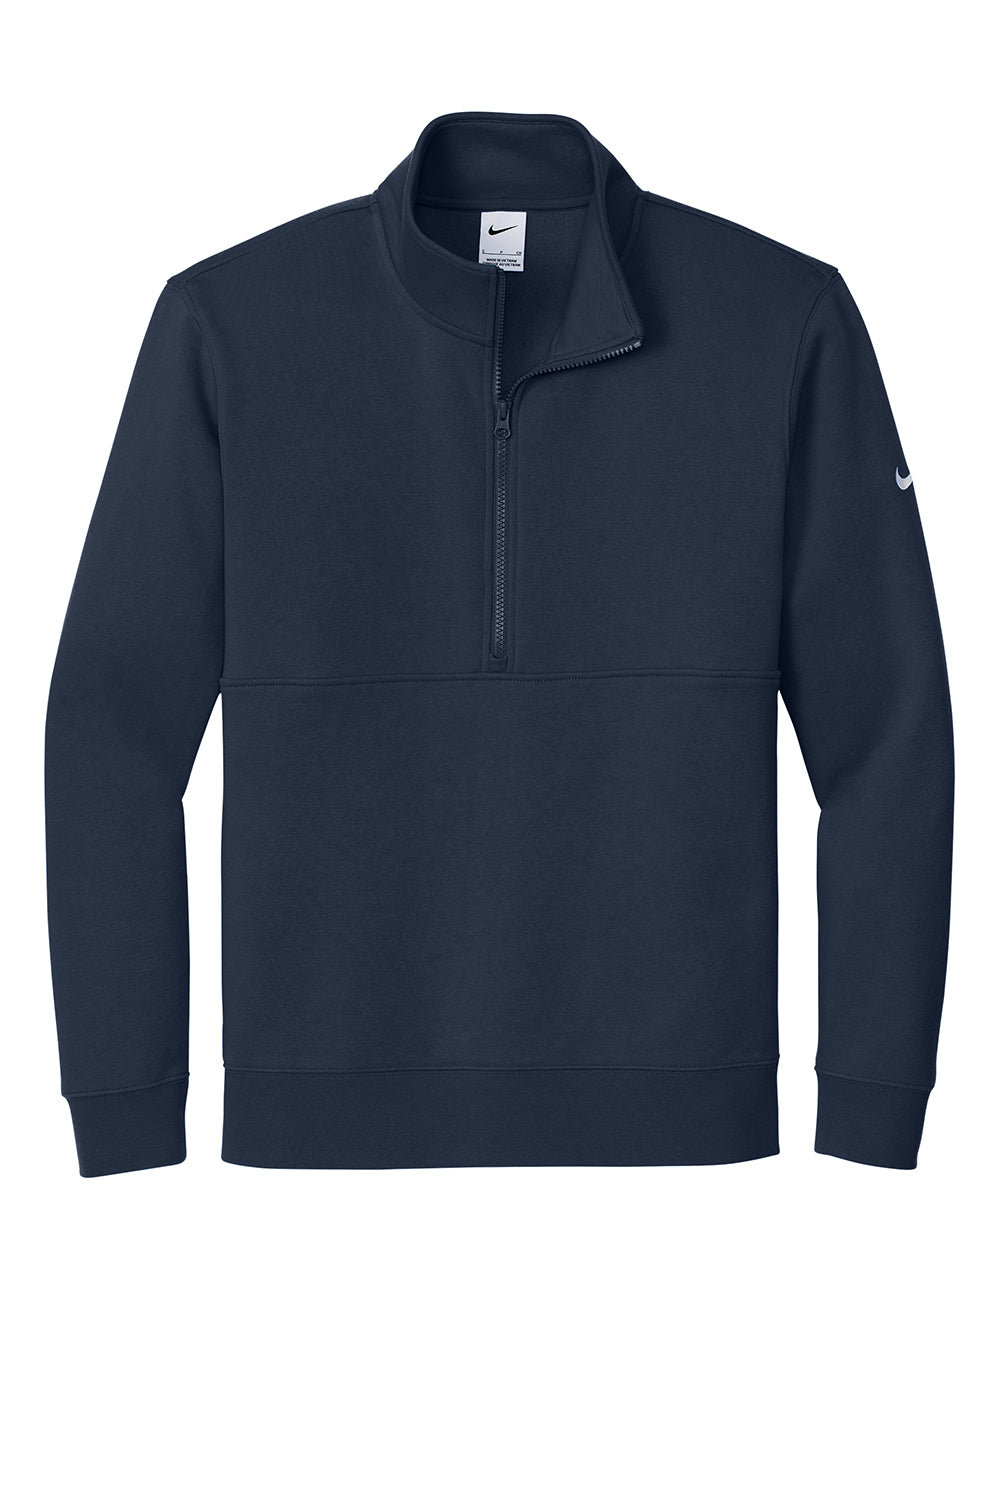 Nike NKDX6718 Mens Club Fleece 1/4 Zip Sweatshirt Midnight Navy Blue Flat Front